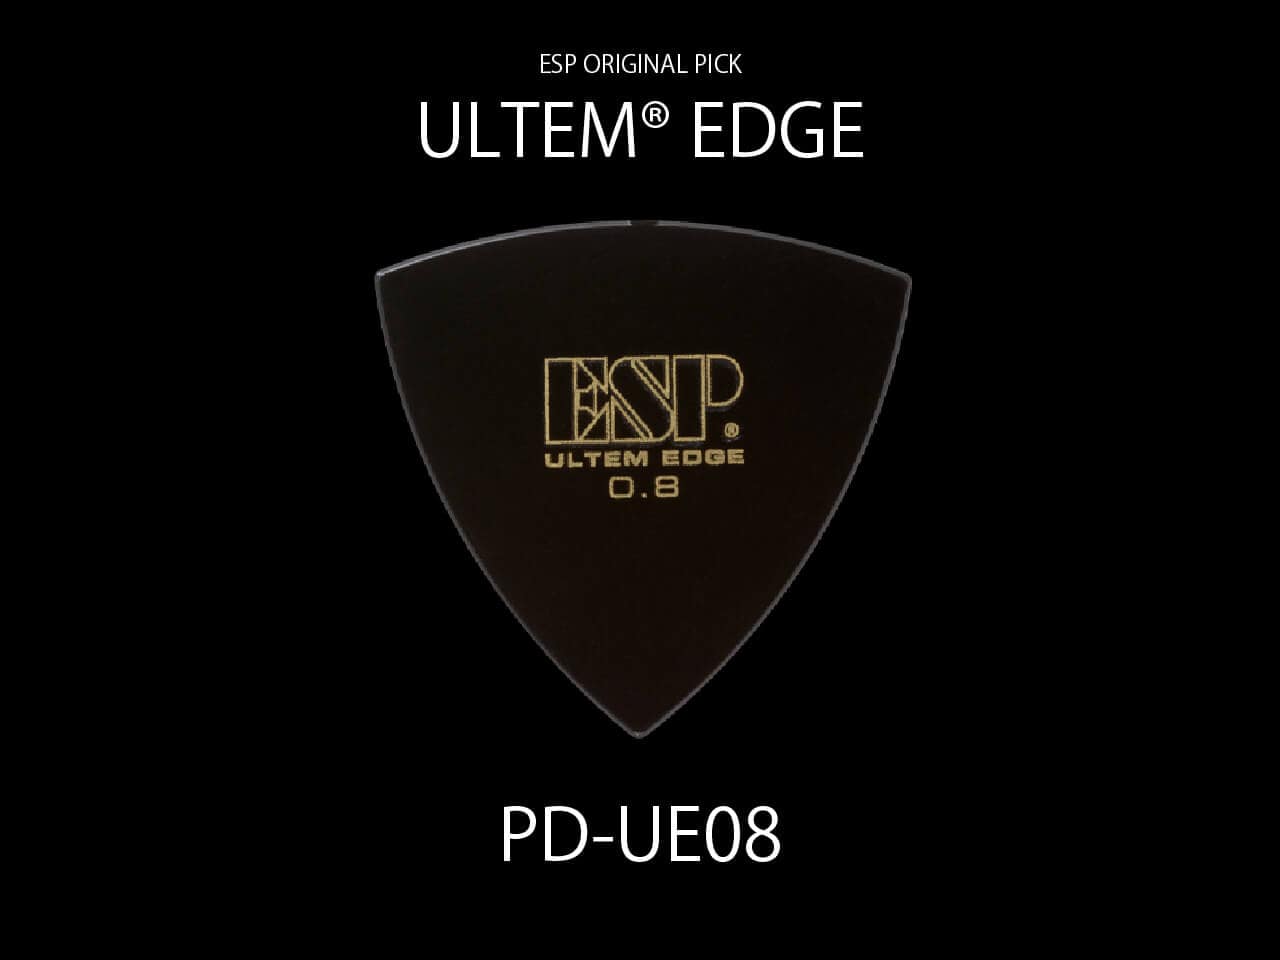 ESP(イーエスピー) Original Pick Series PD-UE08 / ULTEM® EDGE